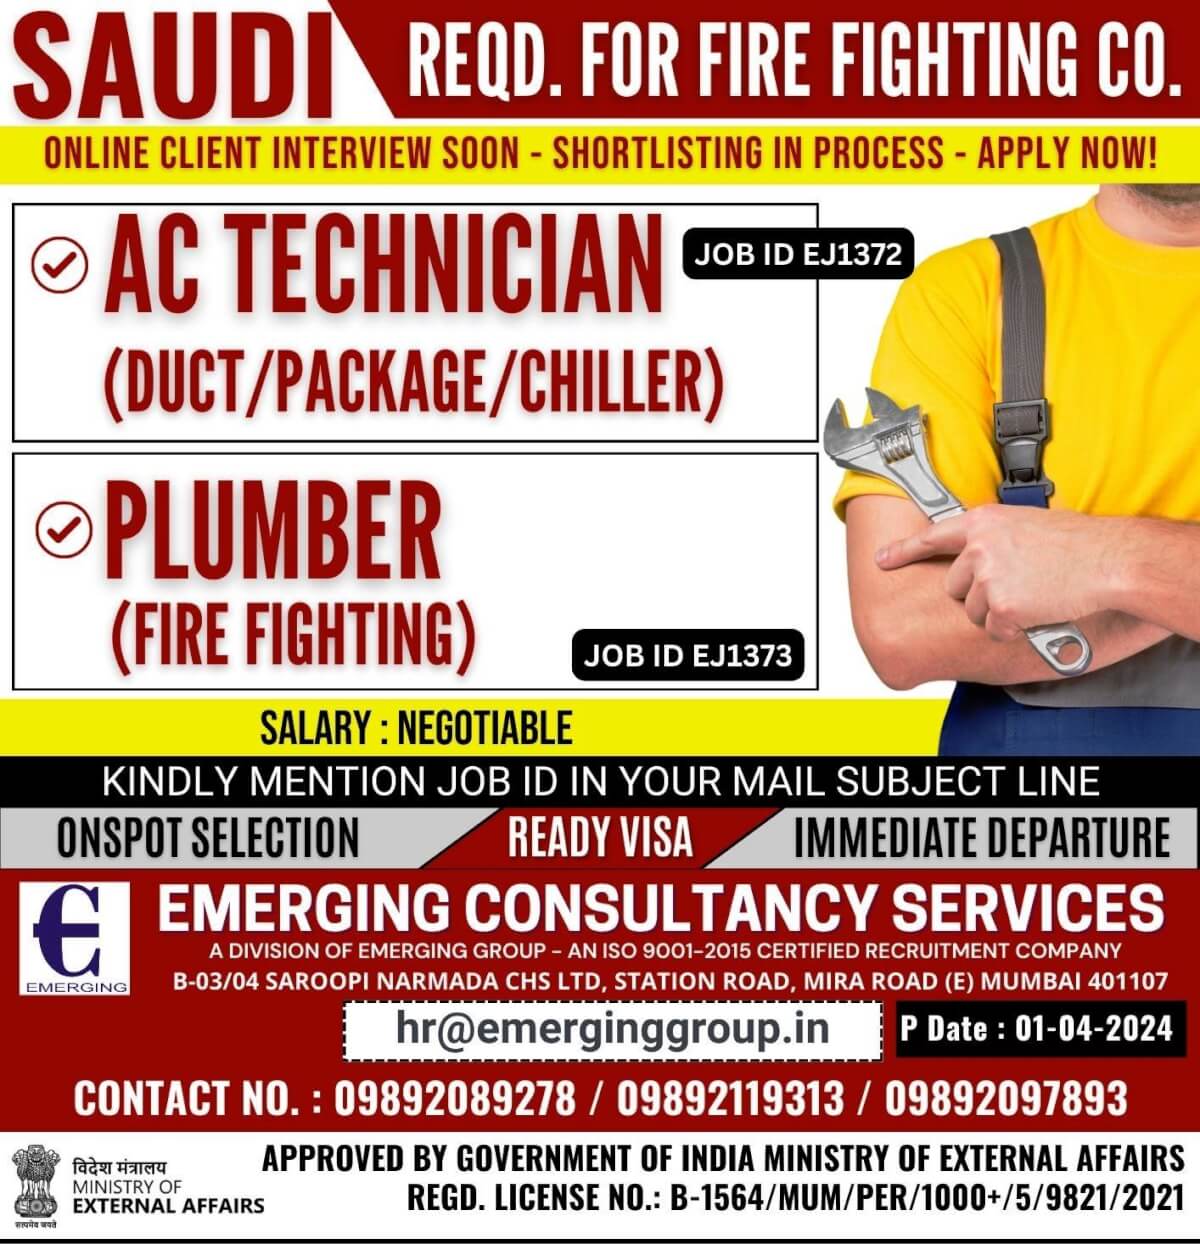 REQD. FOR FIRE FIGHTING COMPANY IN SAUDI ARABIA - SHORTLISTING IN PROCESS